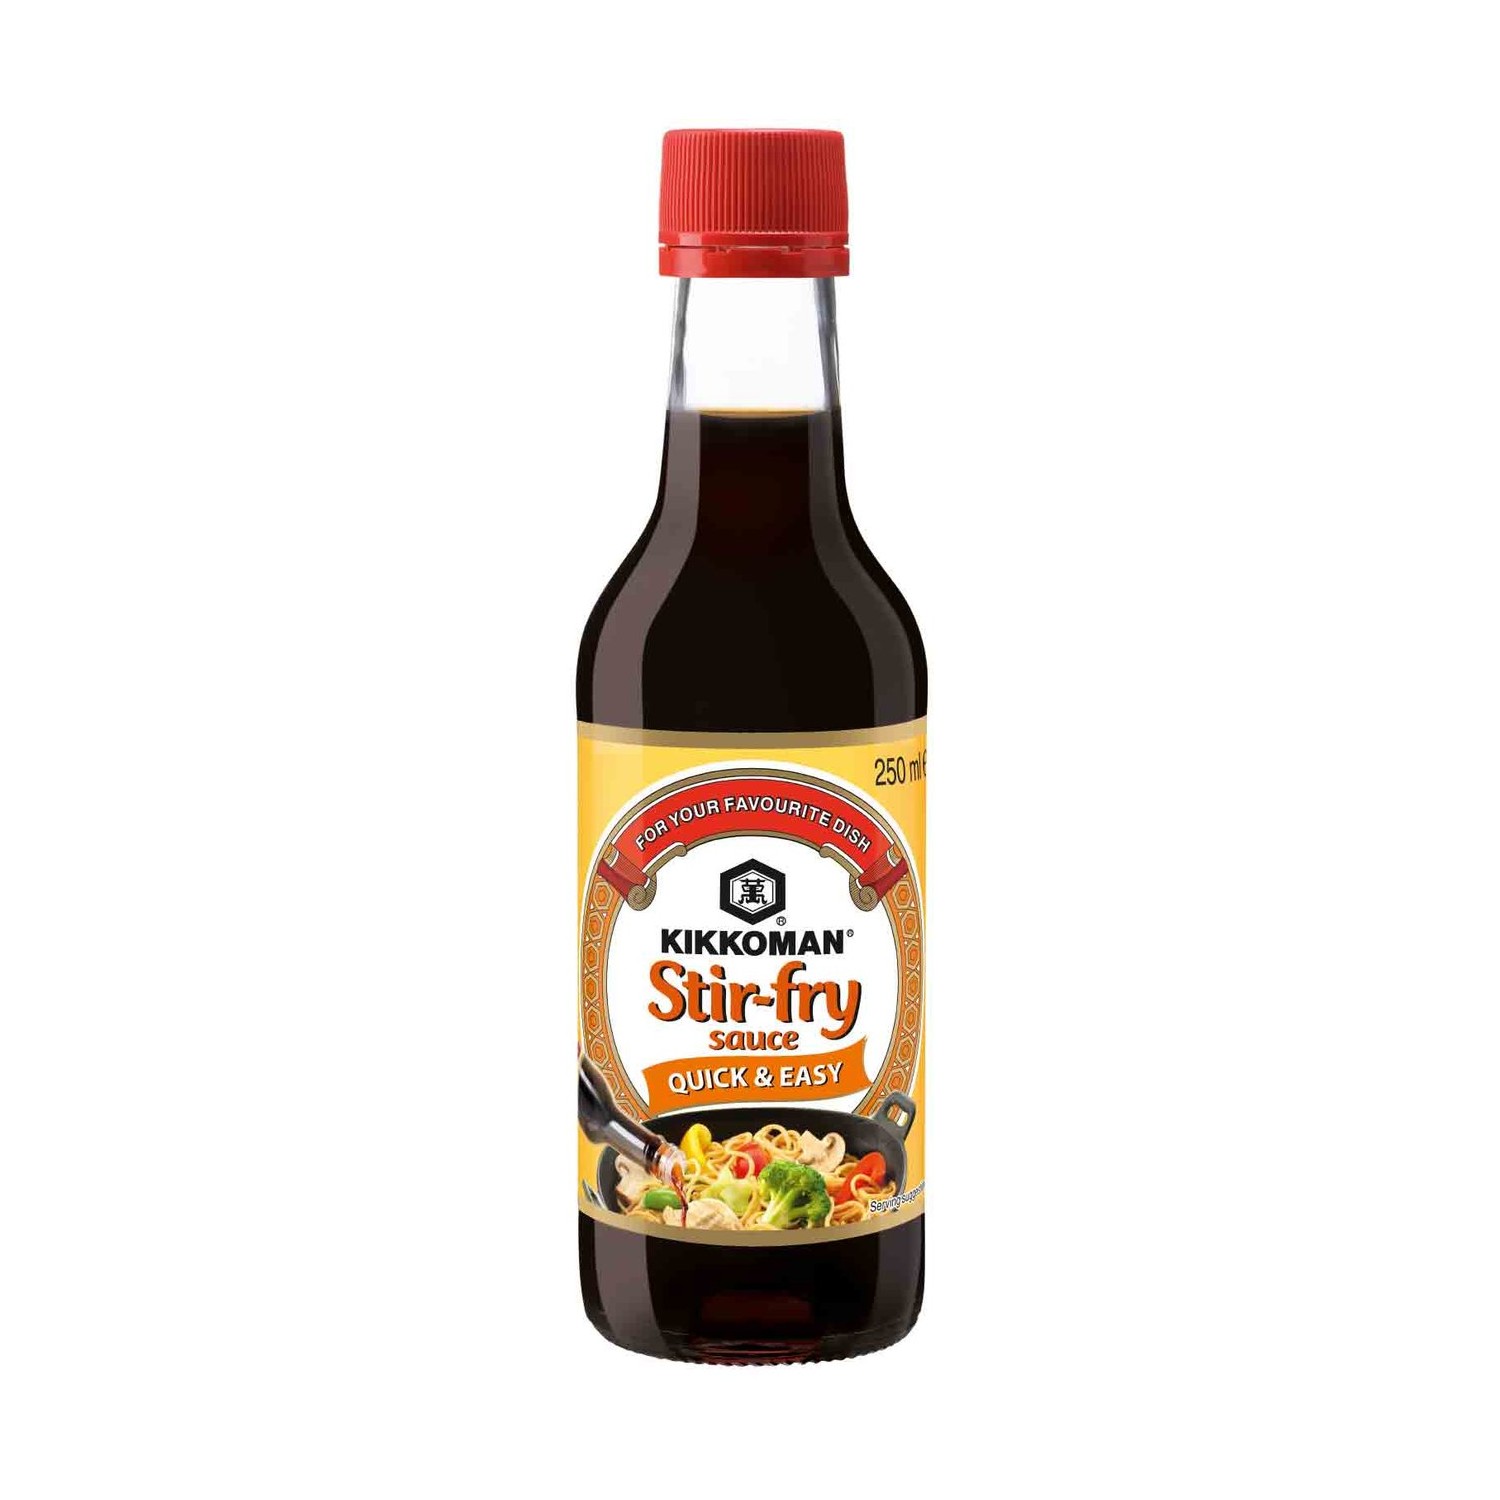 Kikkoman Stir-fry sauce 250ml 万字炒面酱 250ML